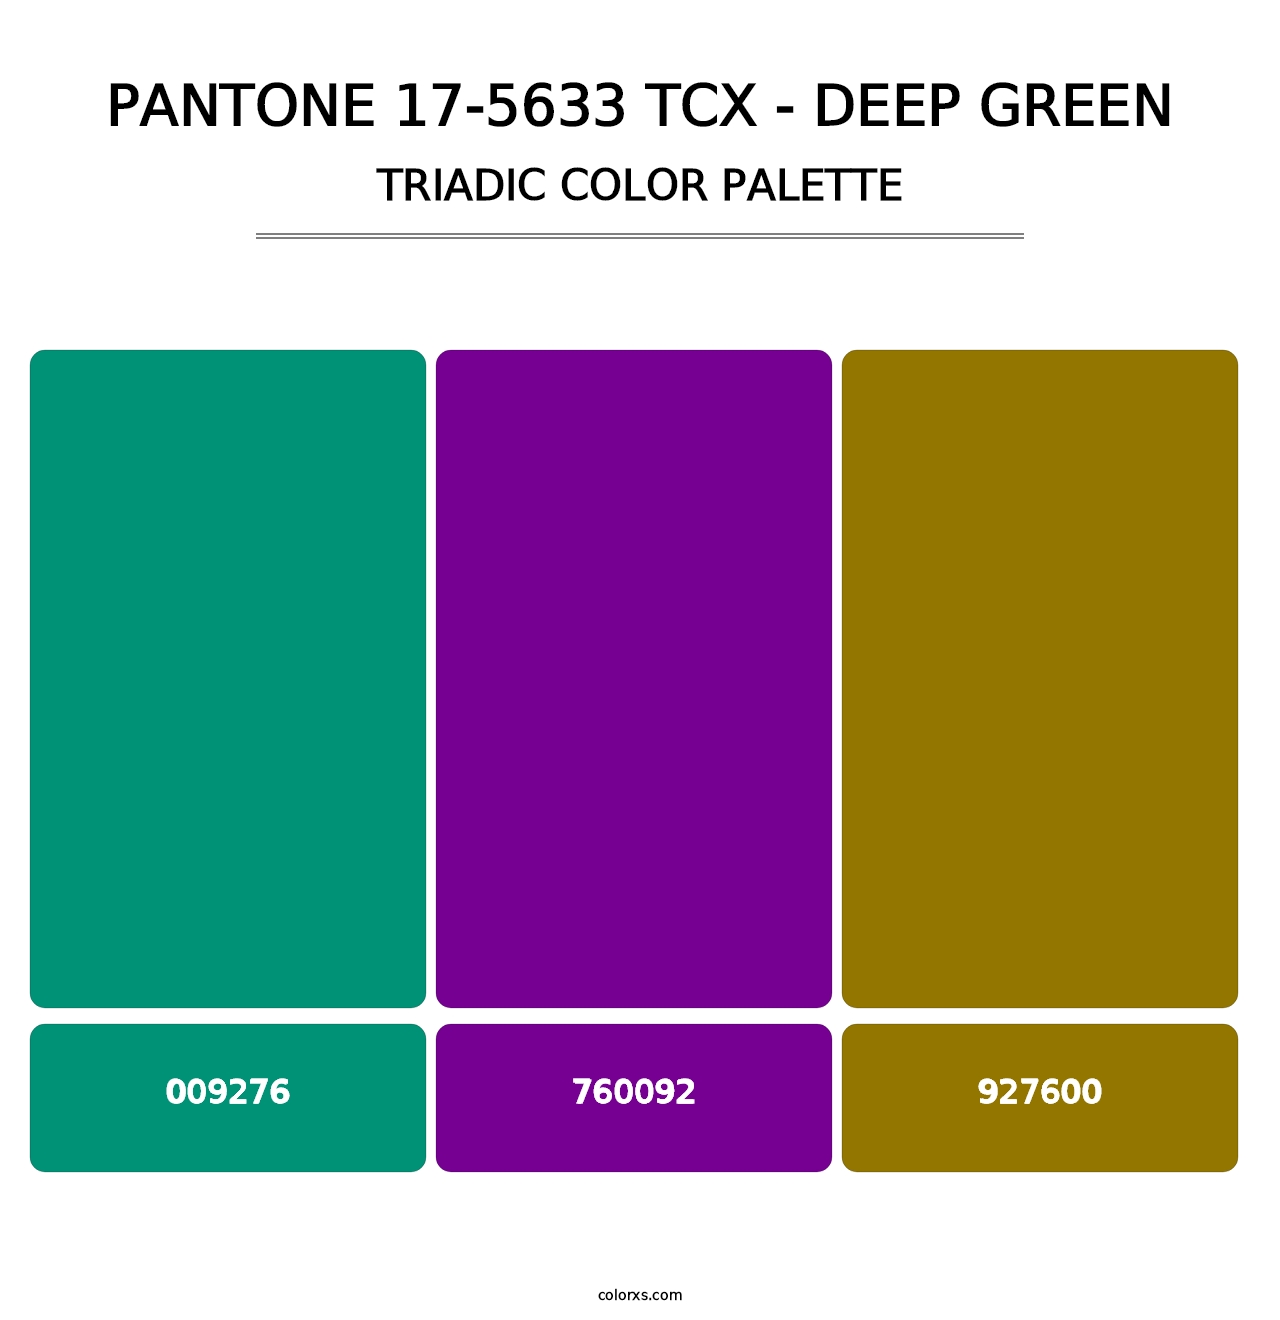 PANTONE 17-5633 TCX - Deep Green - Triadic Color Palette